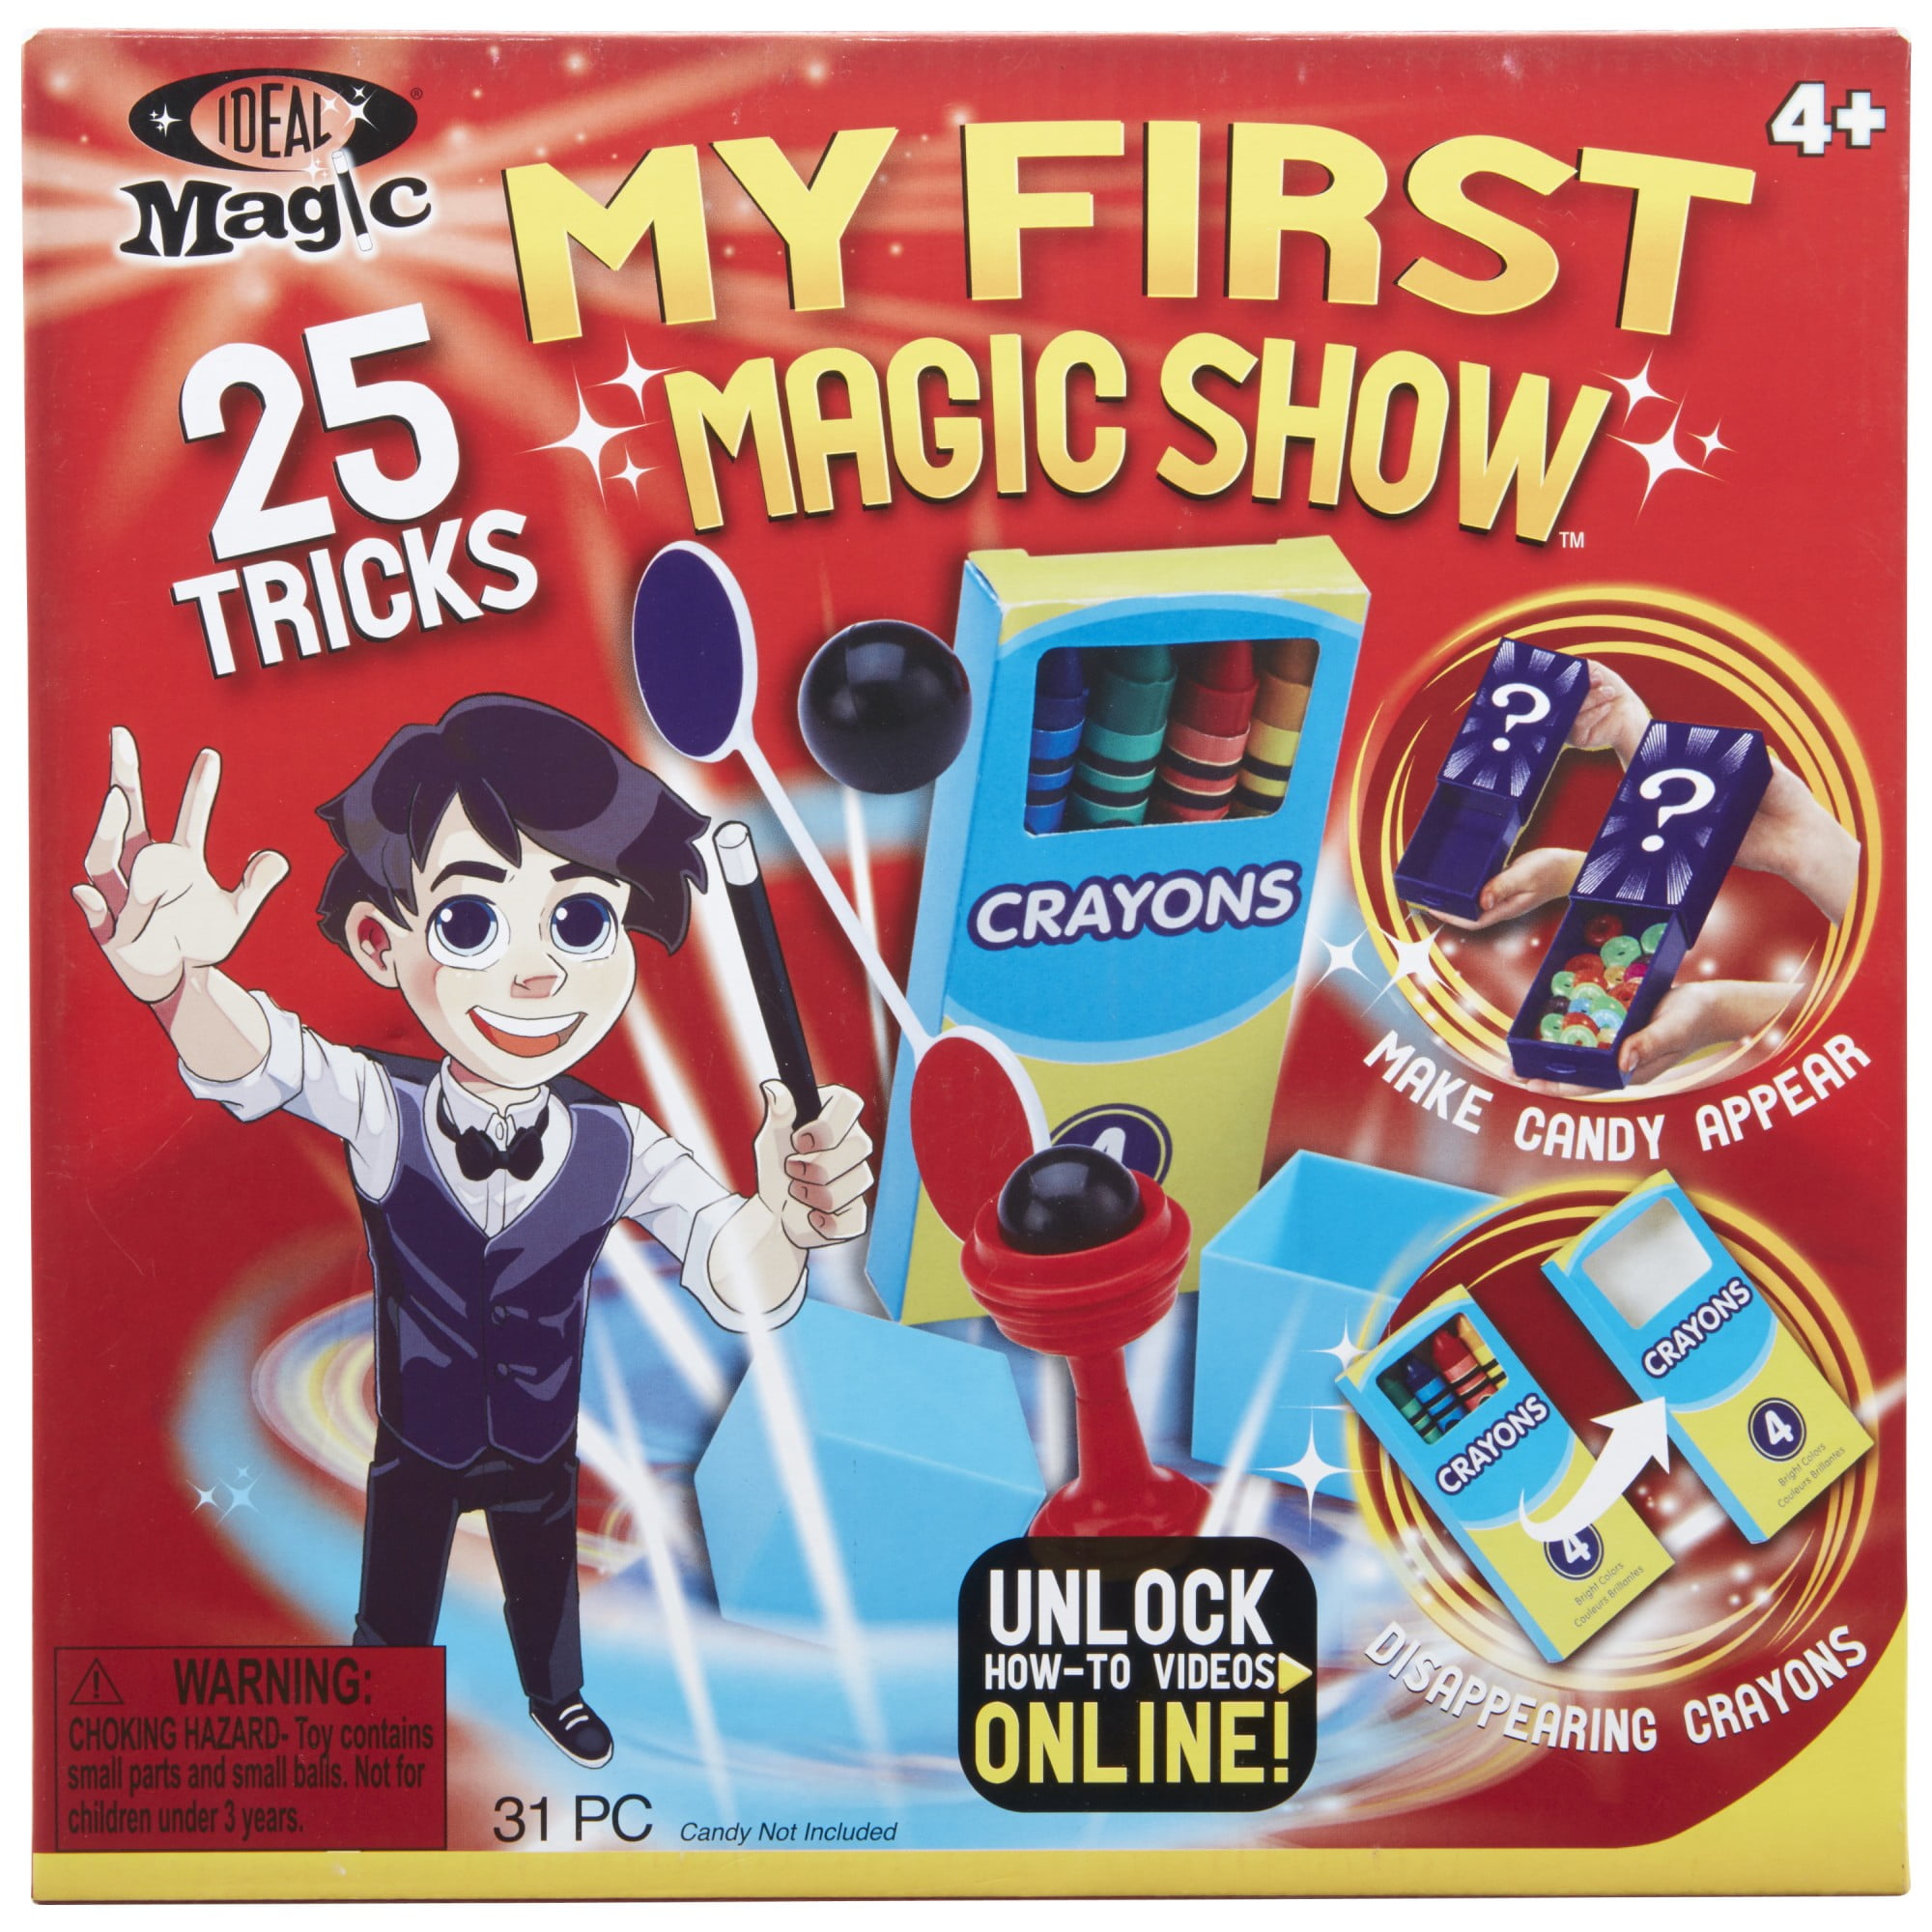 Magic Makers - Color Changing Hanky - Magic Trick 